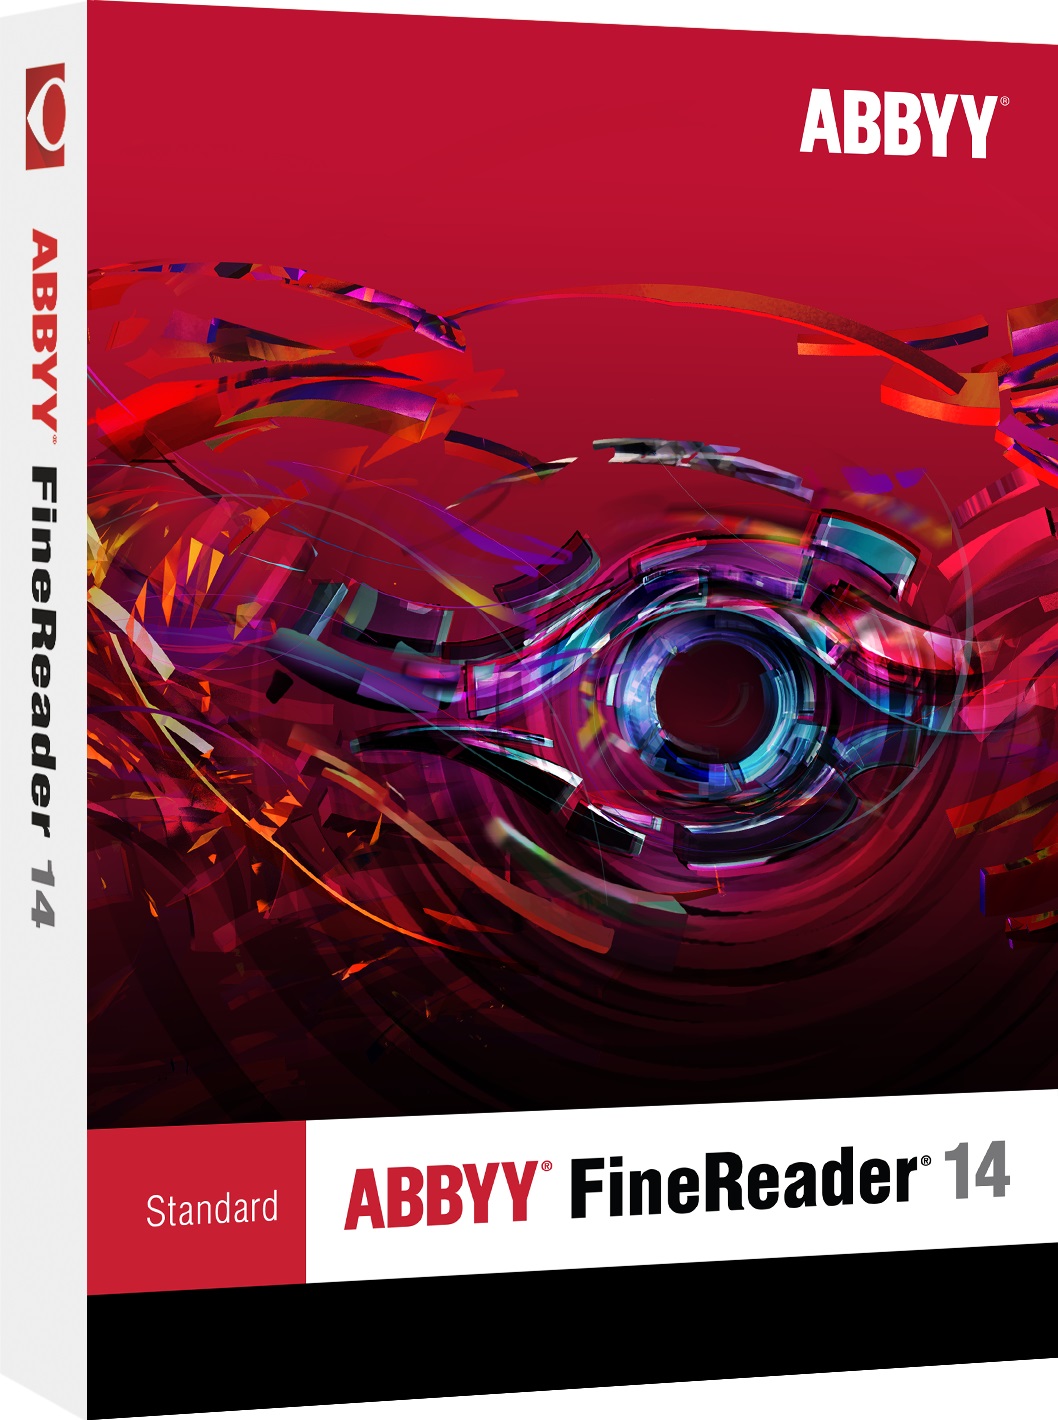 Standard-abbyy-finereader14-box-l-rgb.jpg